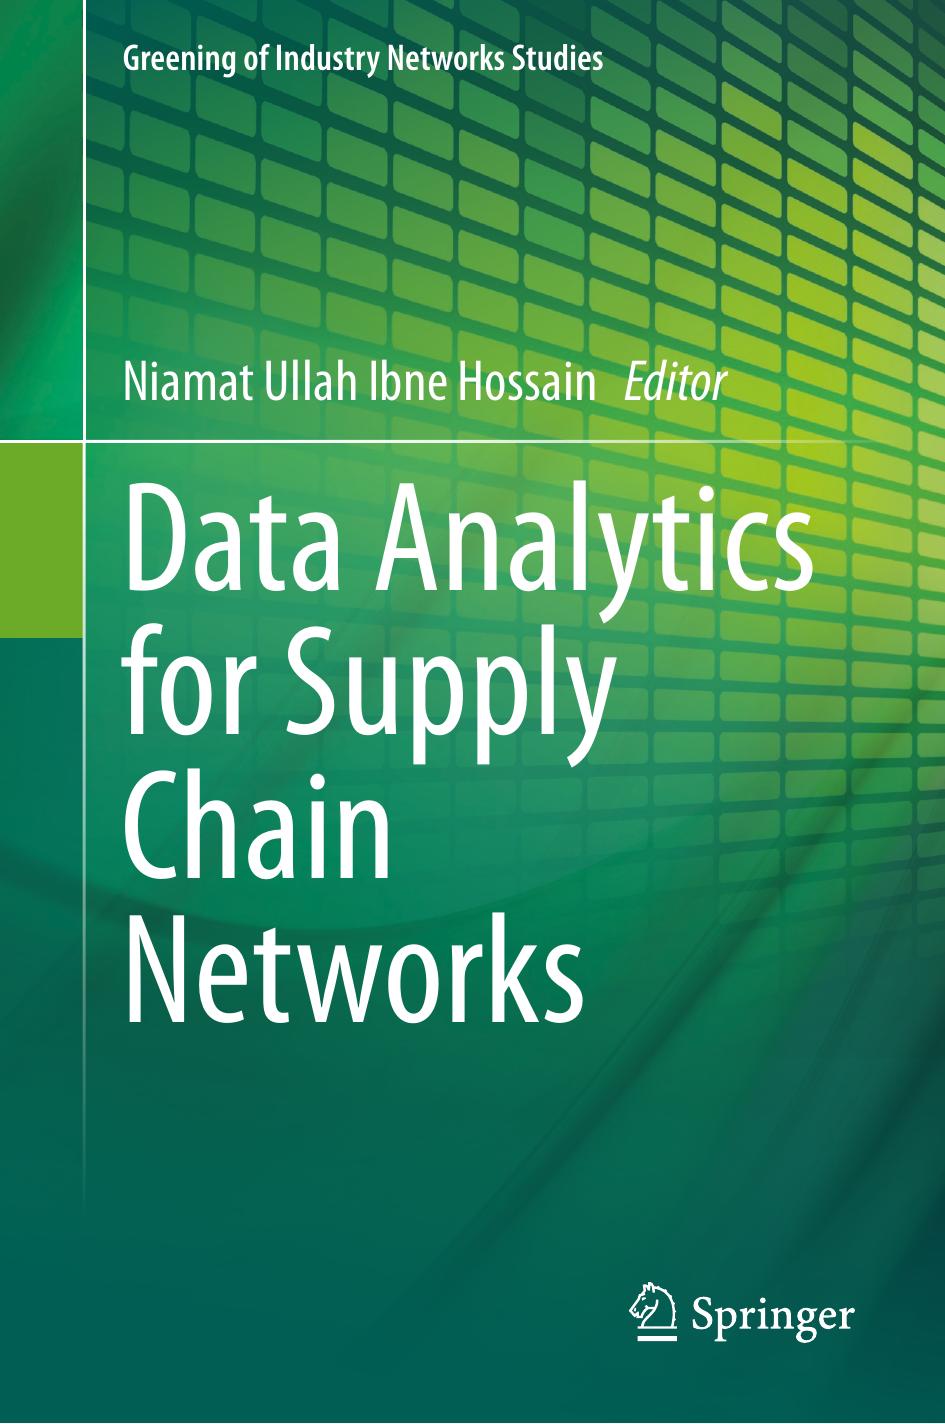 Data Analytics for Supply Chain Networks by Niamat Ullah Ibne Hossain